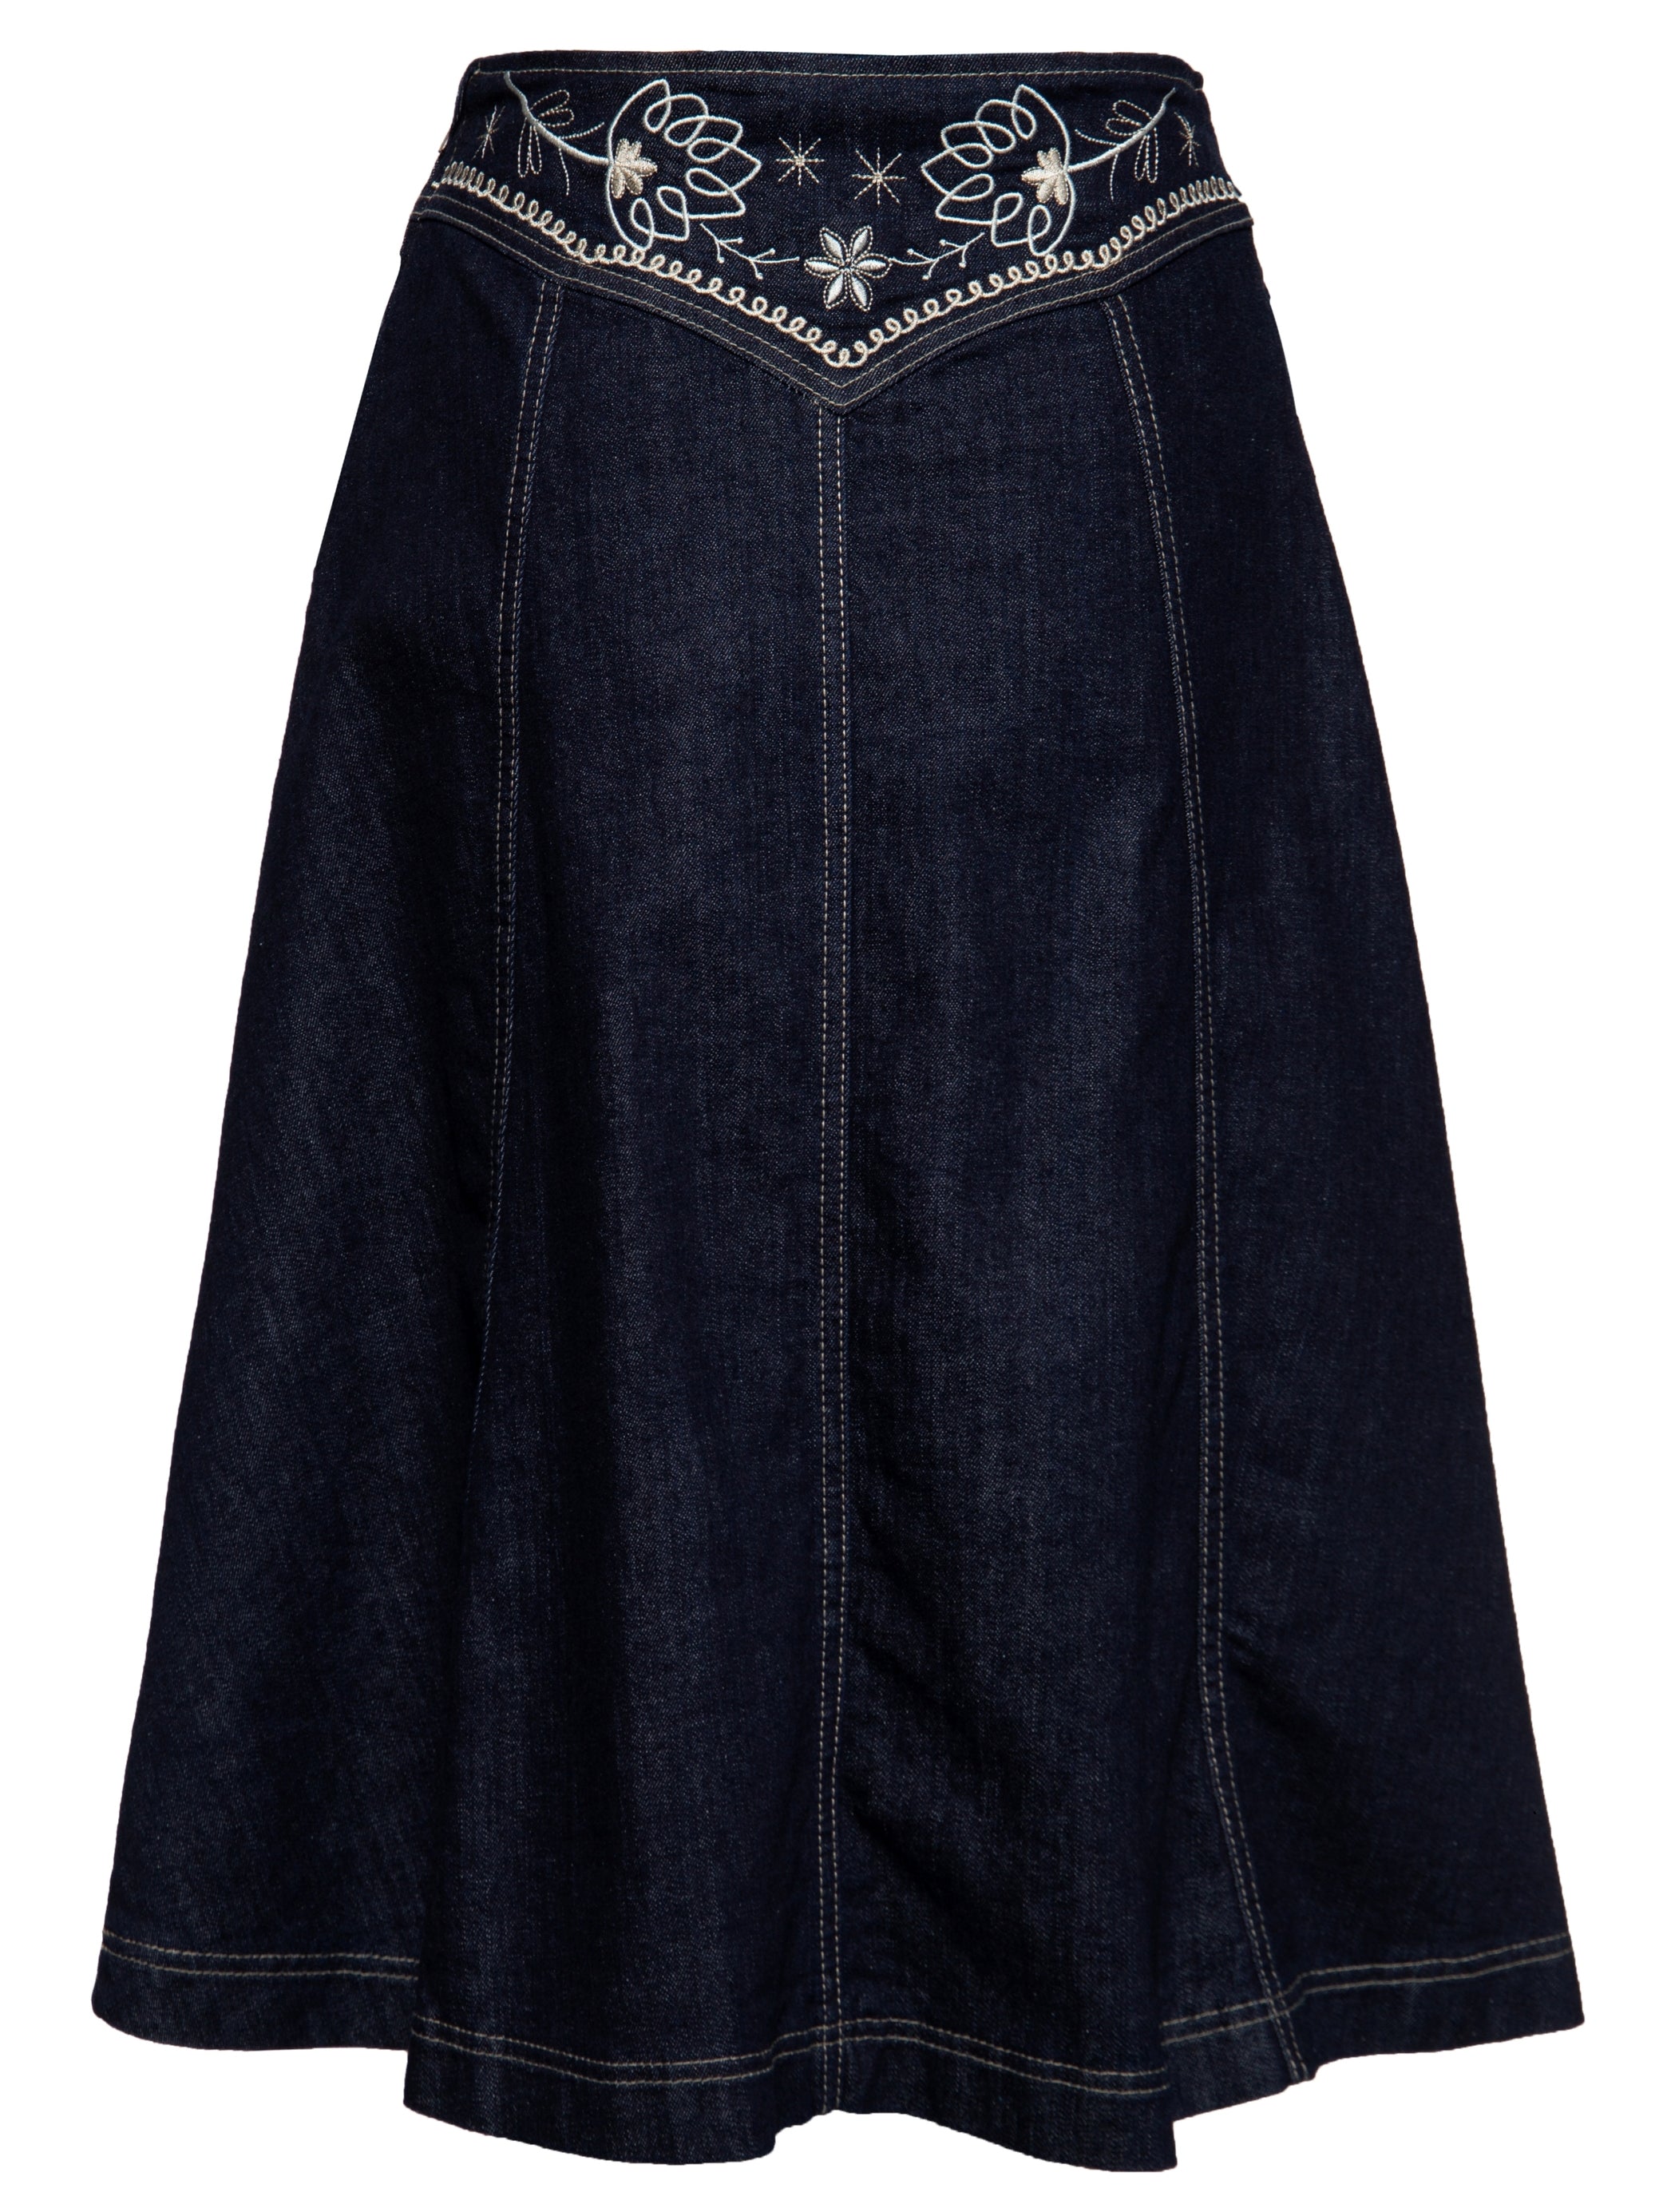 Damen Western Swing Skirt "Flowers" - dark blue wash